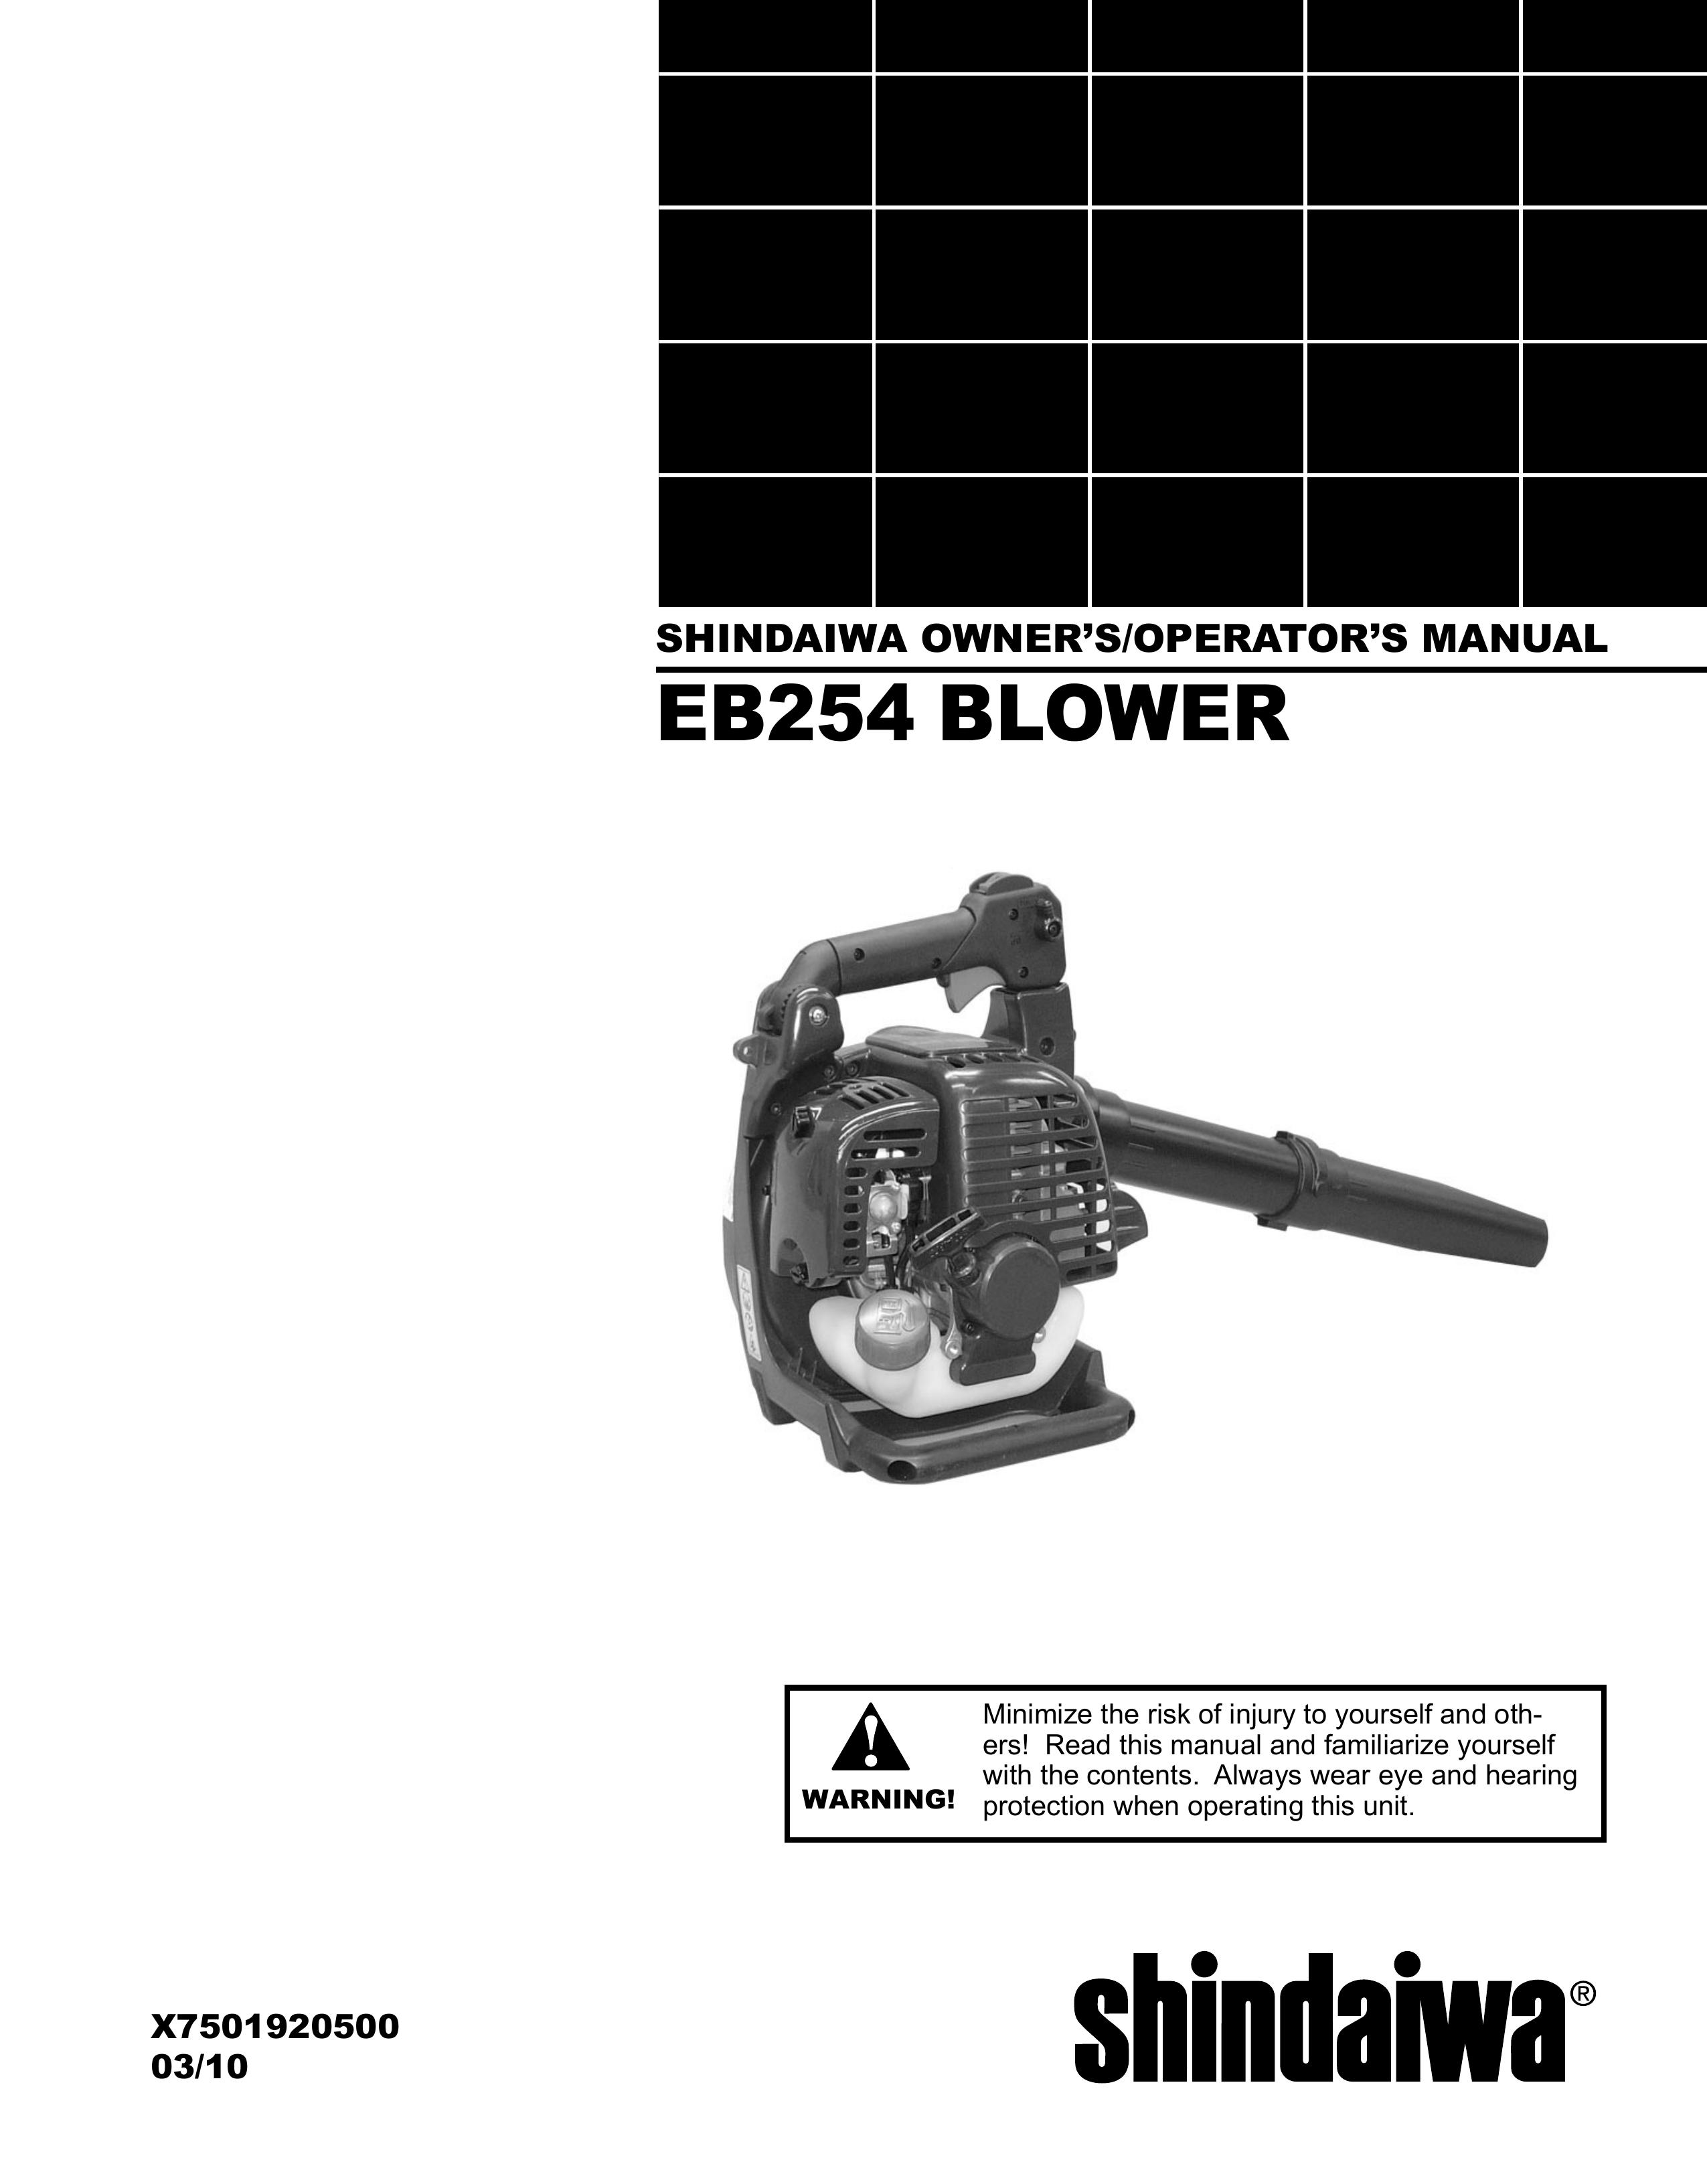 Shindaiwa EB254 Blower User Manual